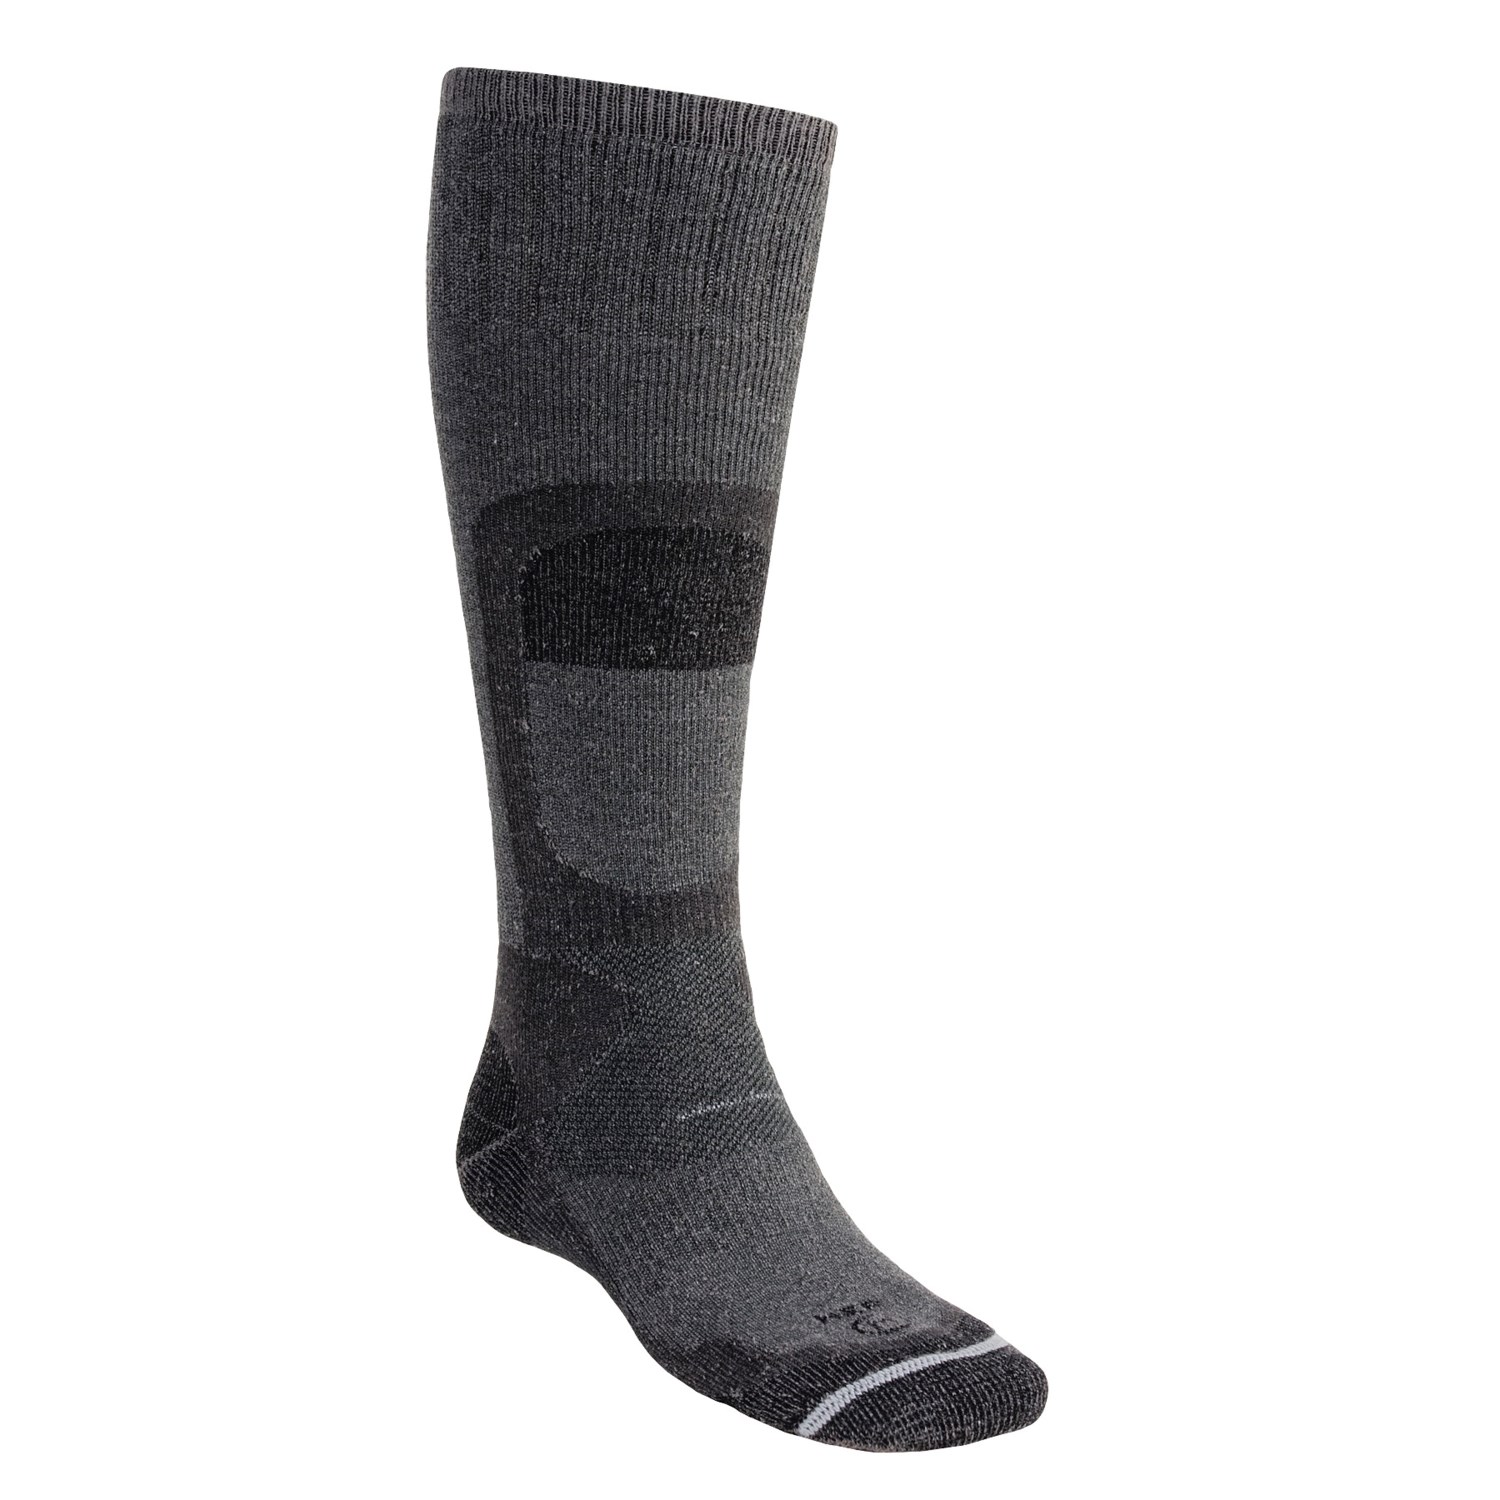 Lorpen PrimaLoft® Hunting Socks (For Men and Women) 2312X - Save 44%